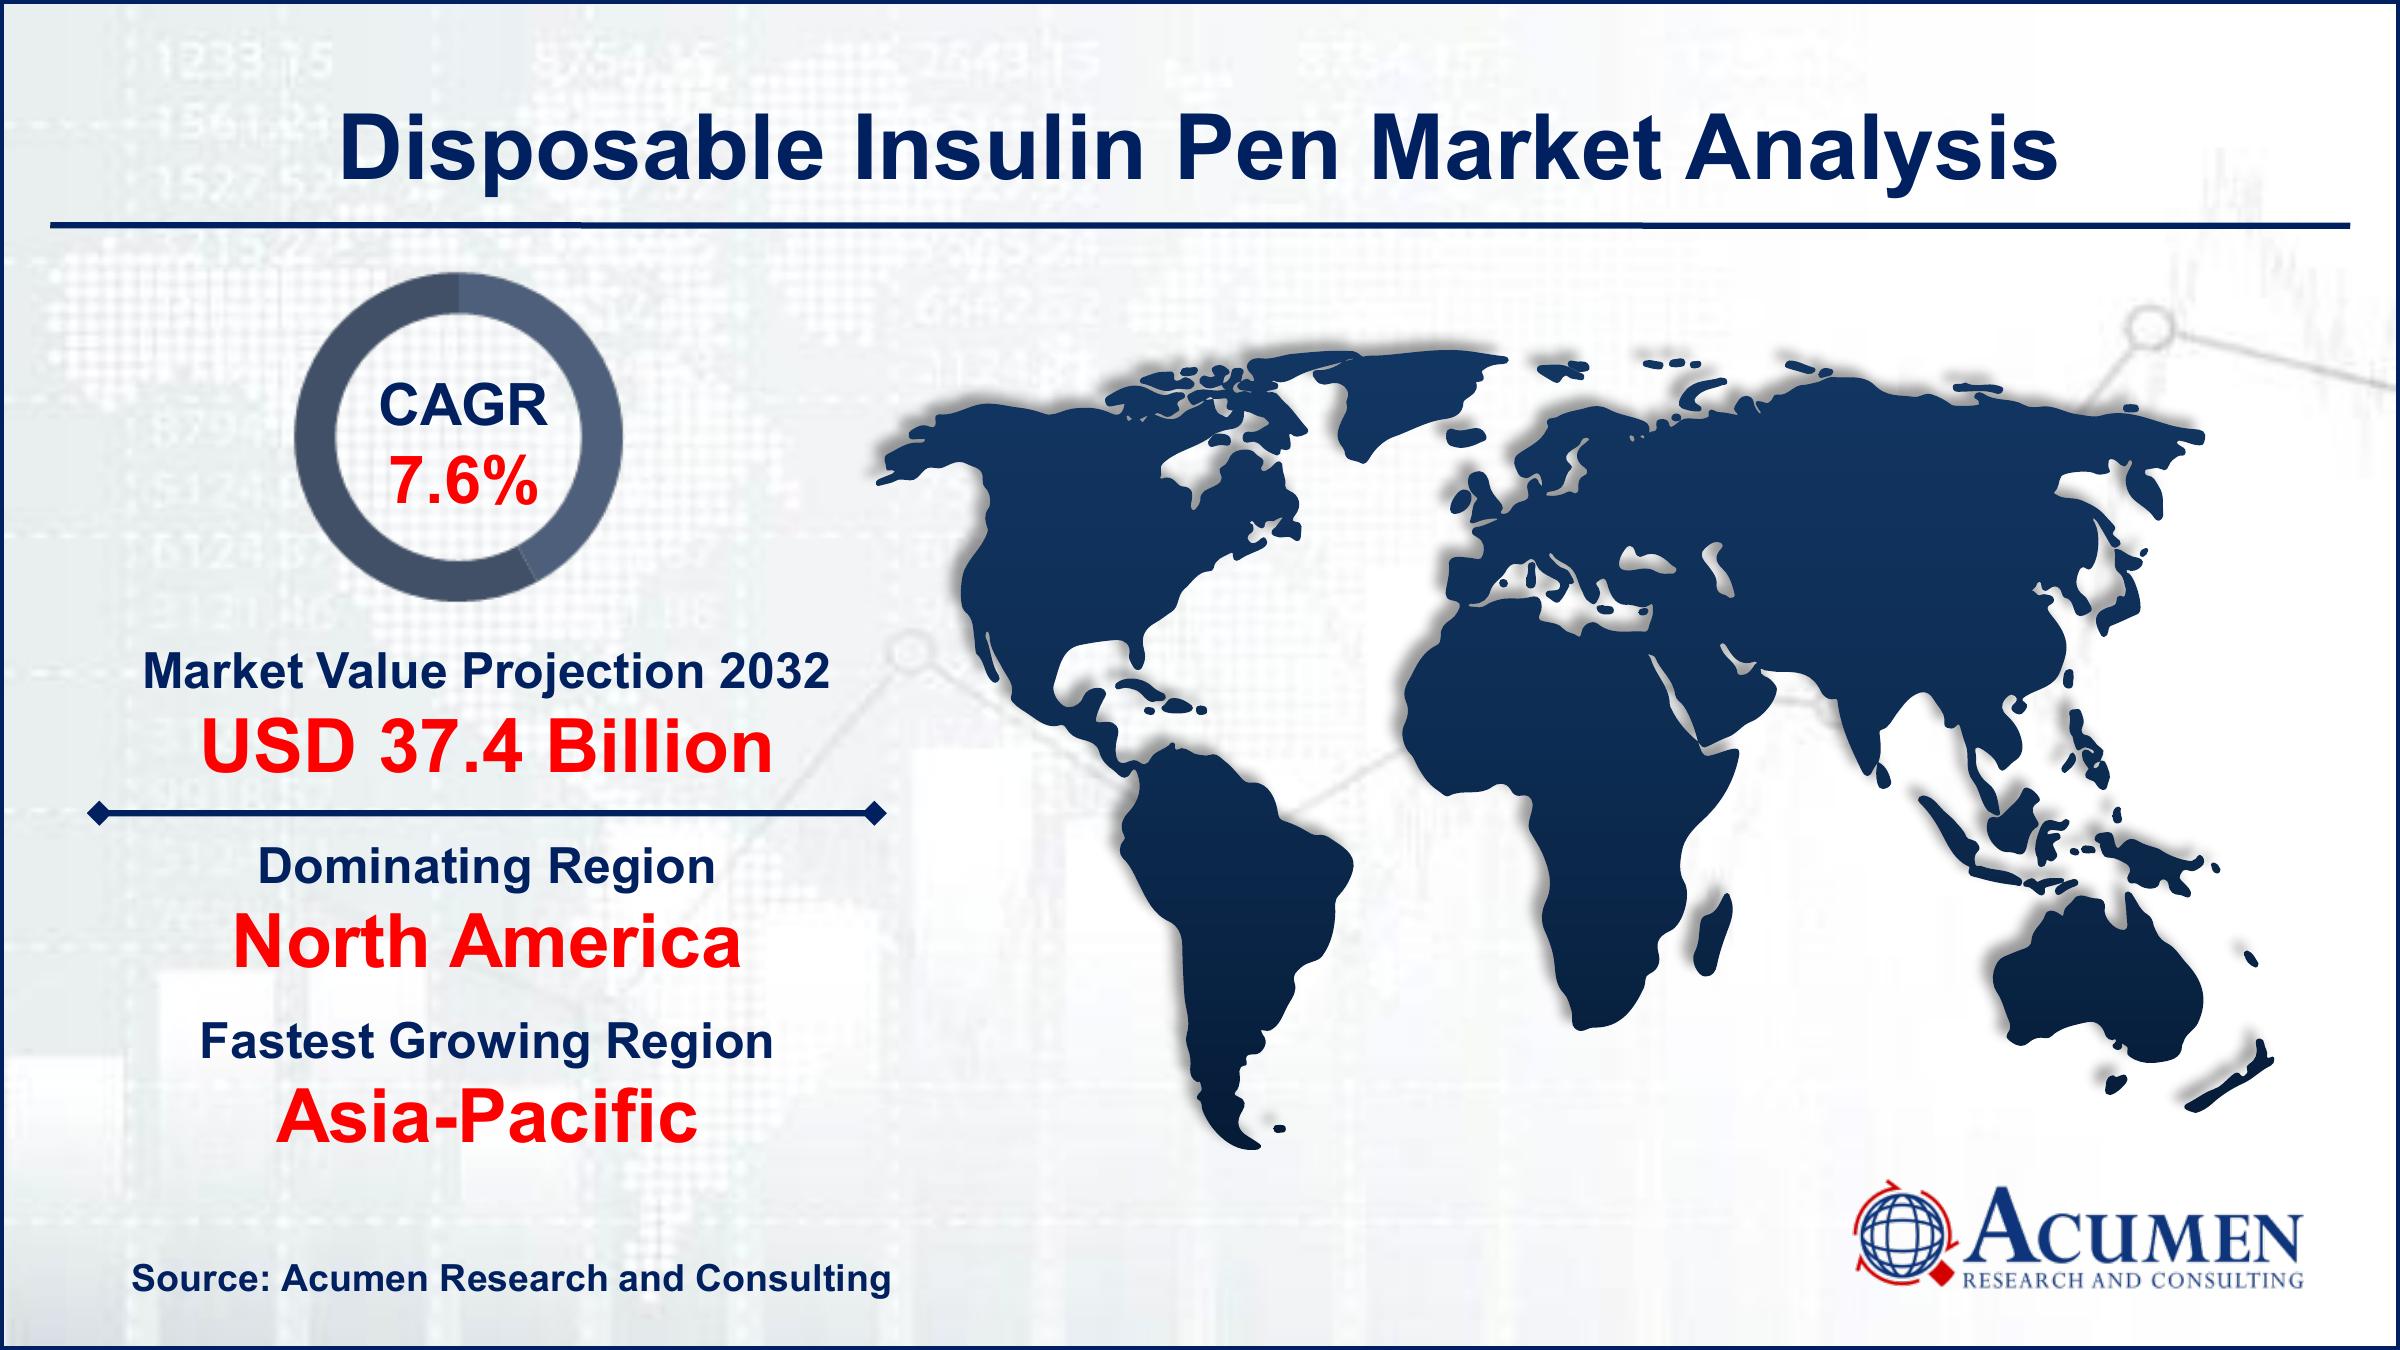 Global Disposable Insulin Pen Market Trends